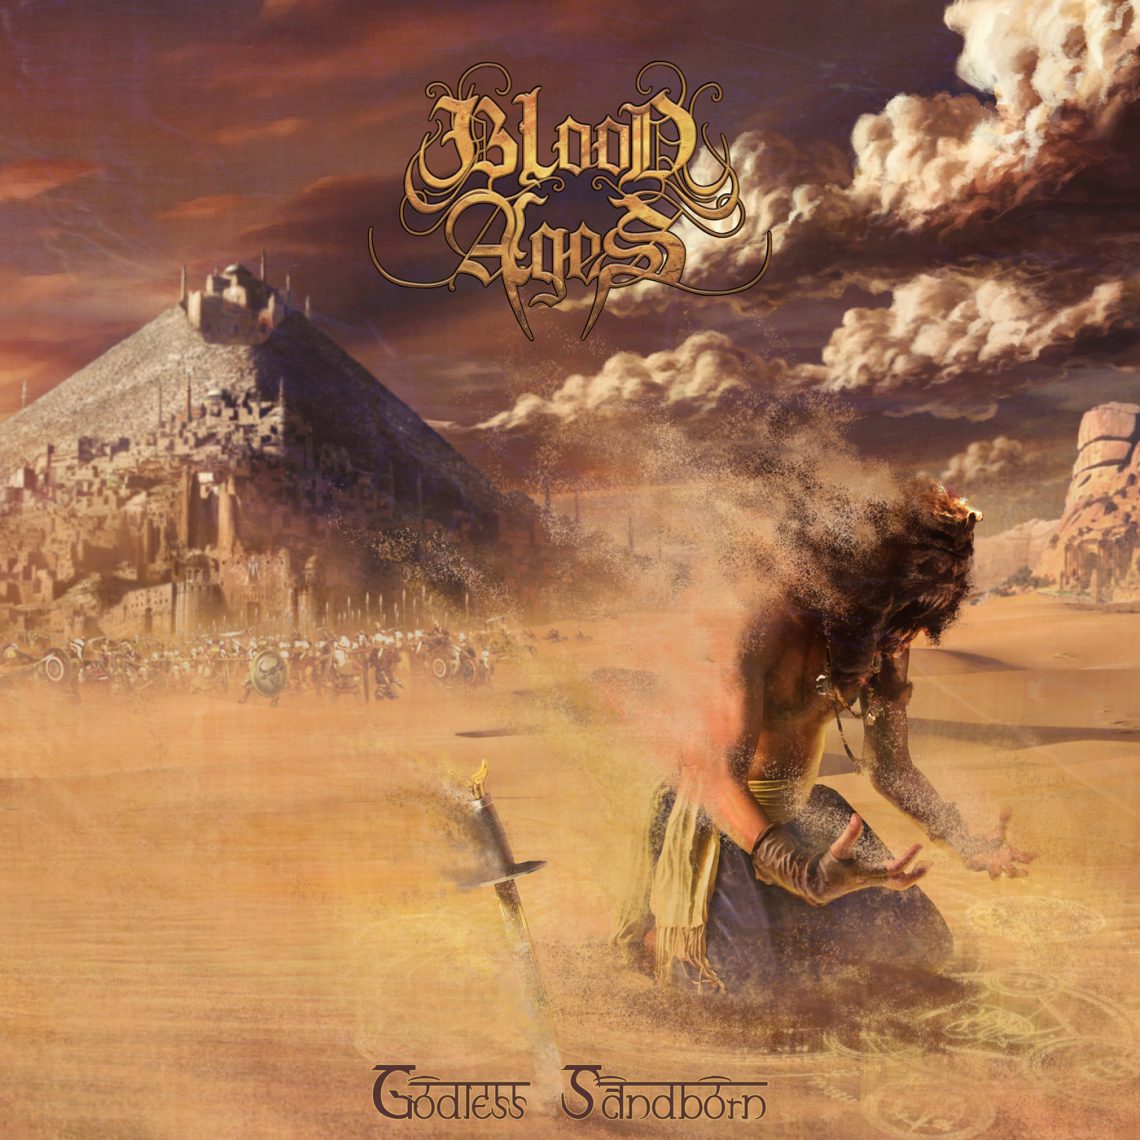 Blood Ages – Godless Sandborn CD Review